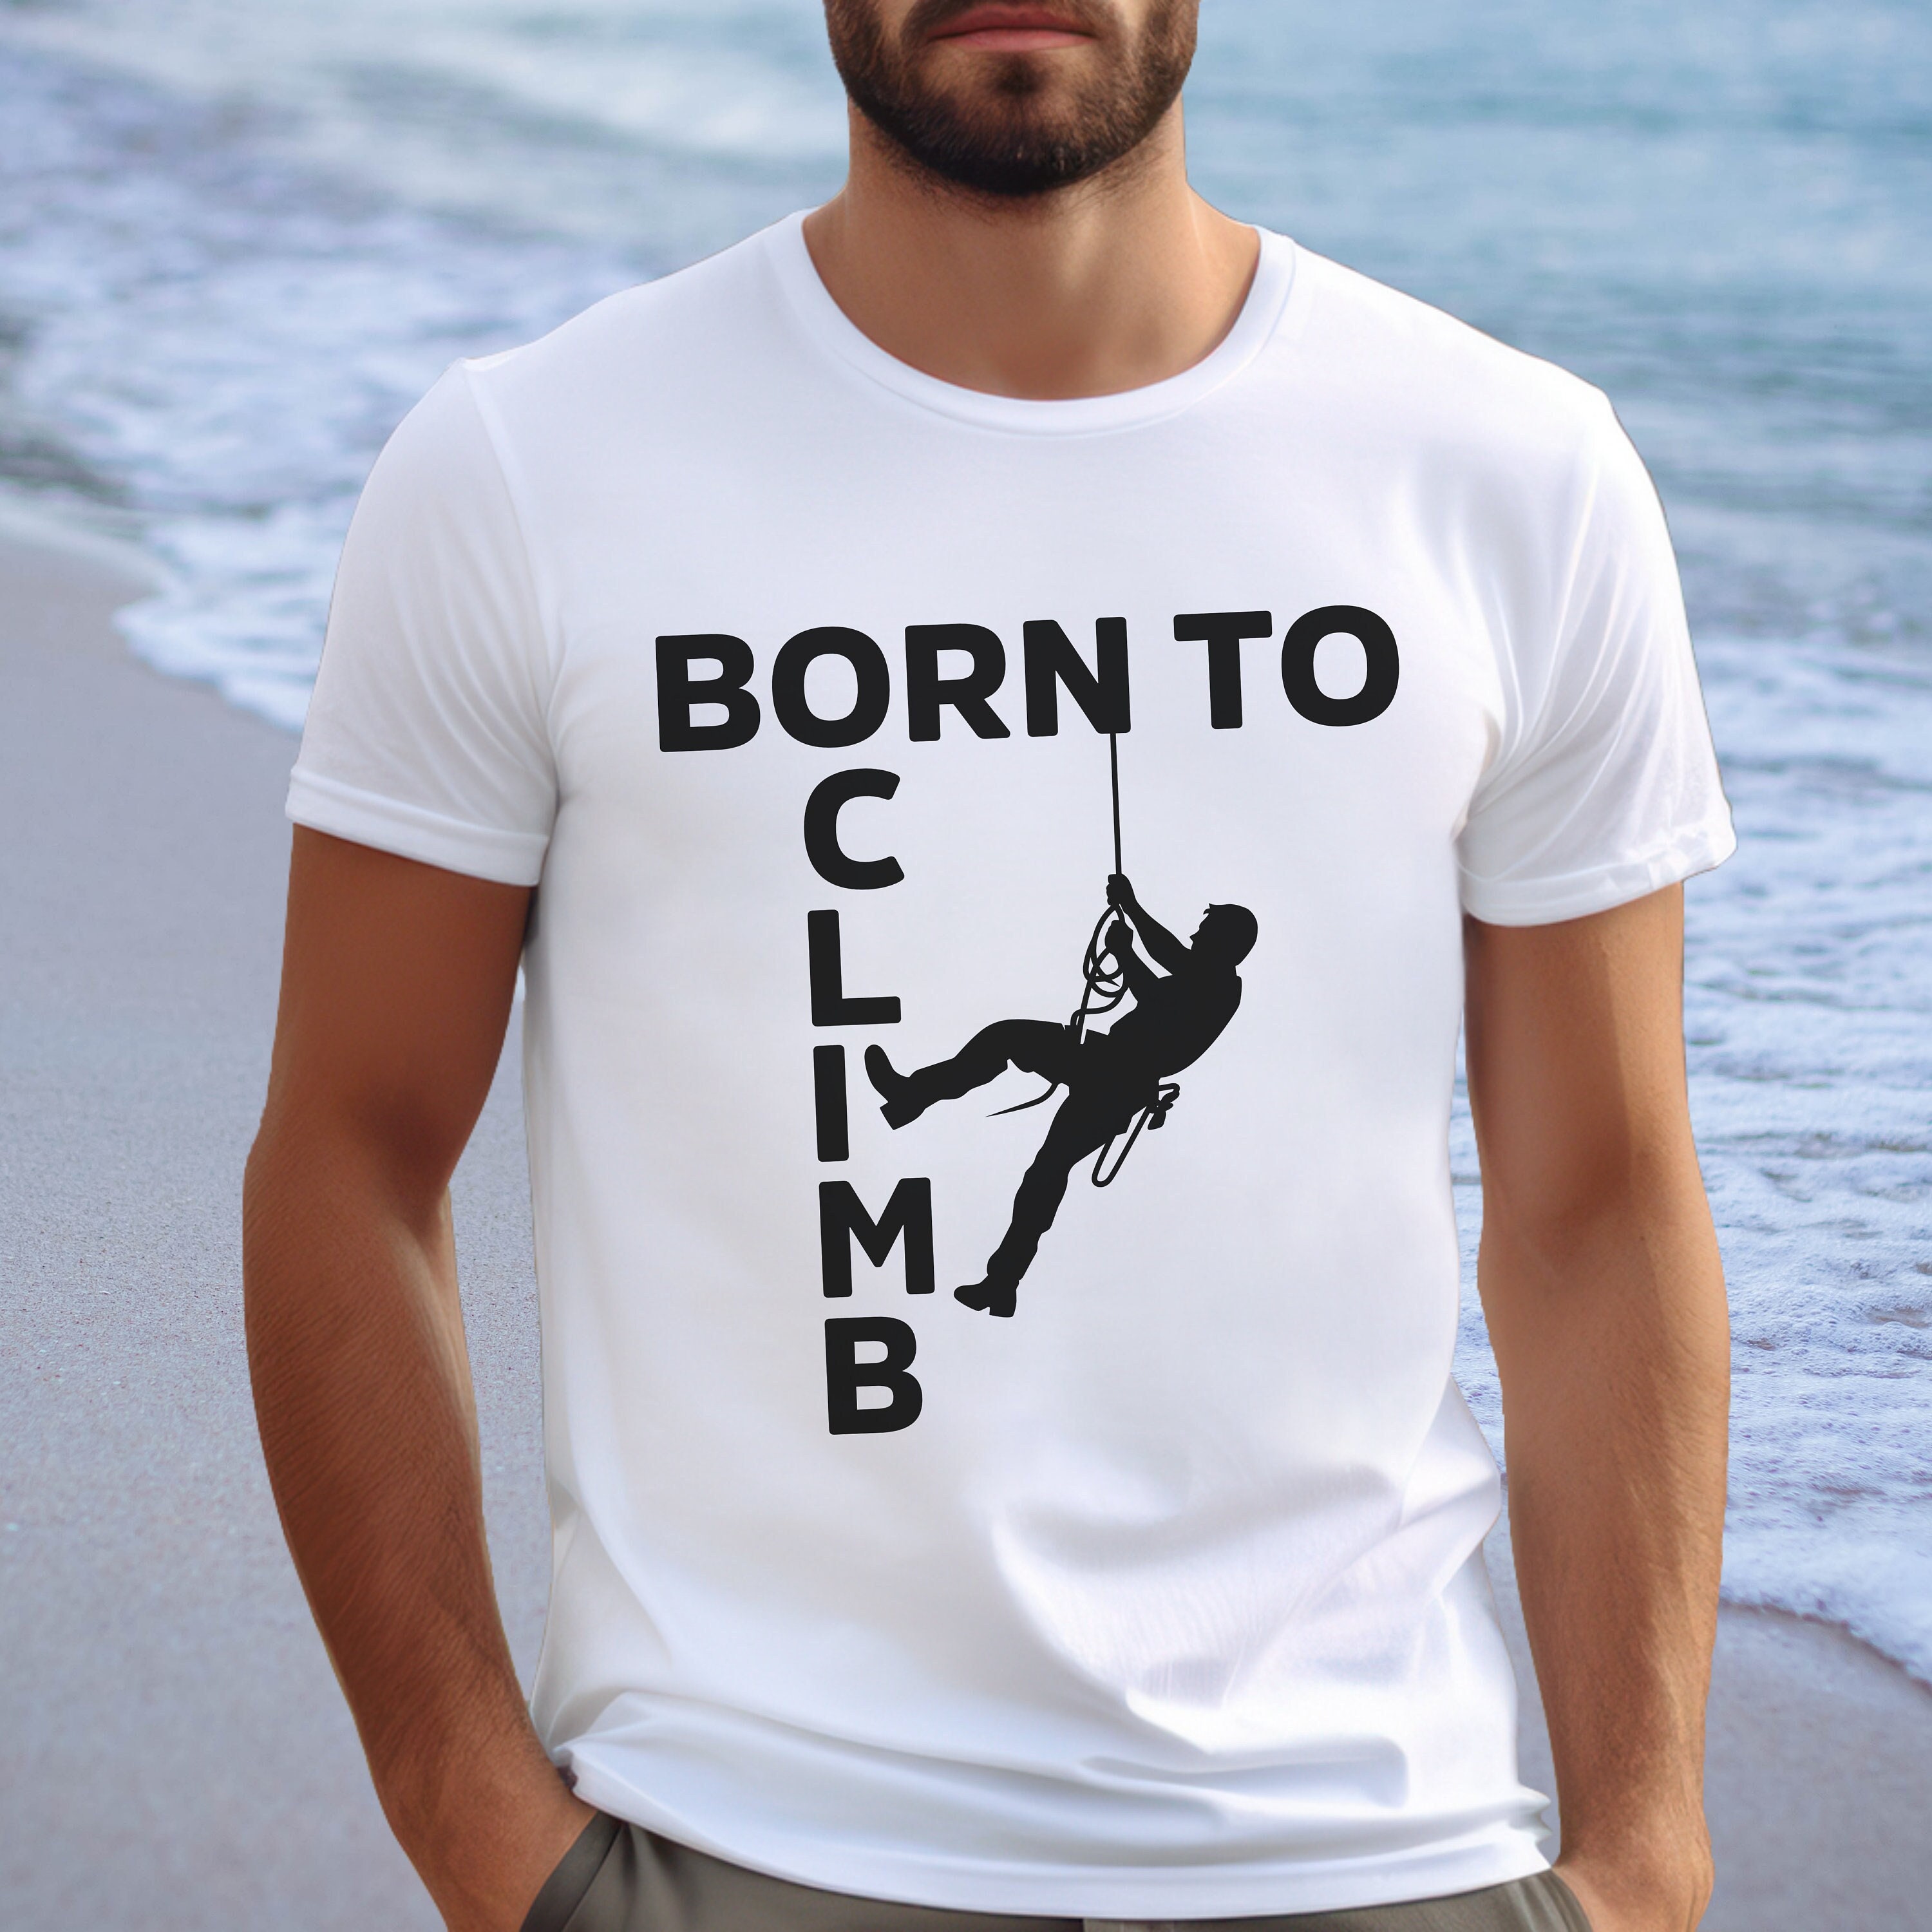 Born to Climb T-shirt, Climber T Shirt, Mountain Climbing, Hiking